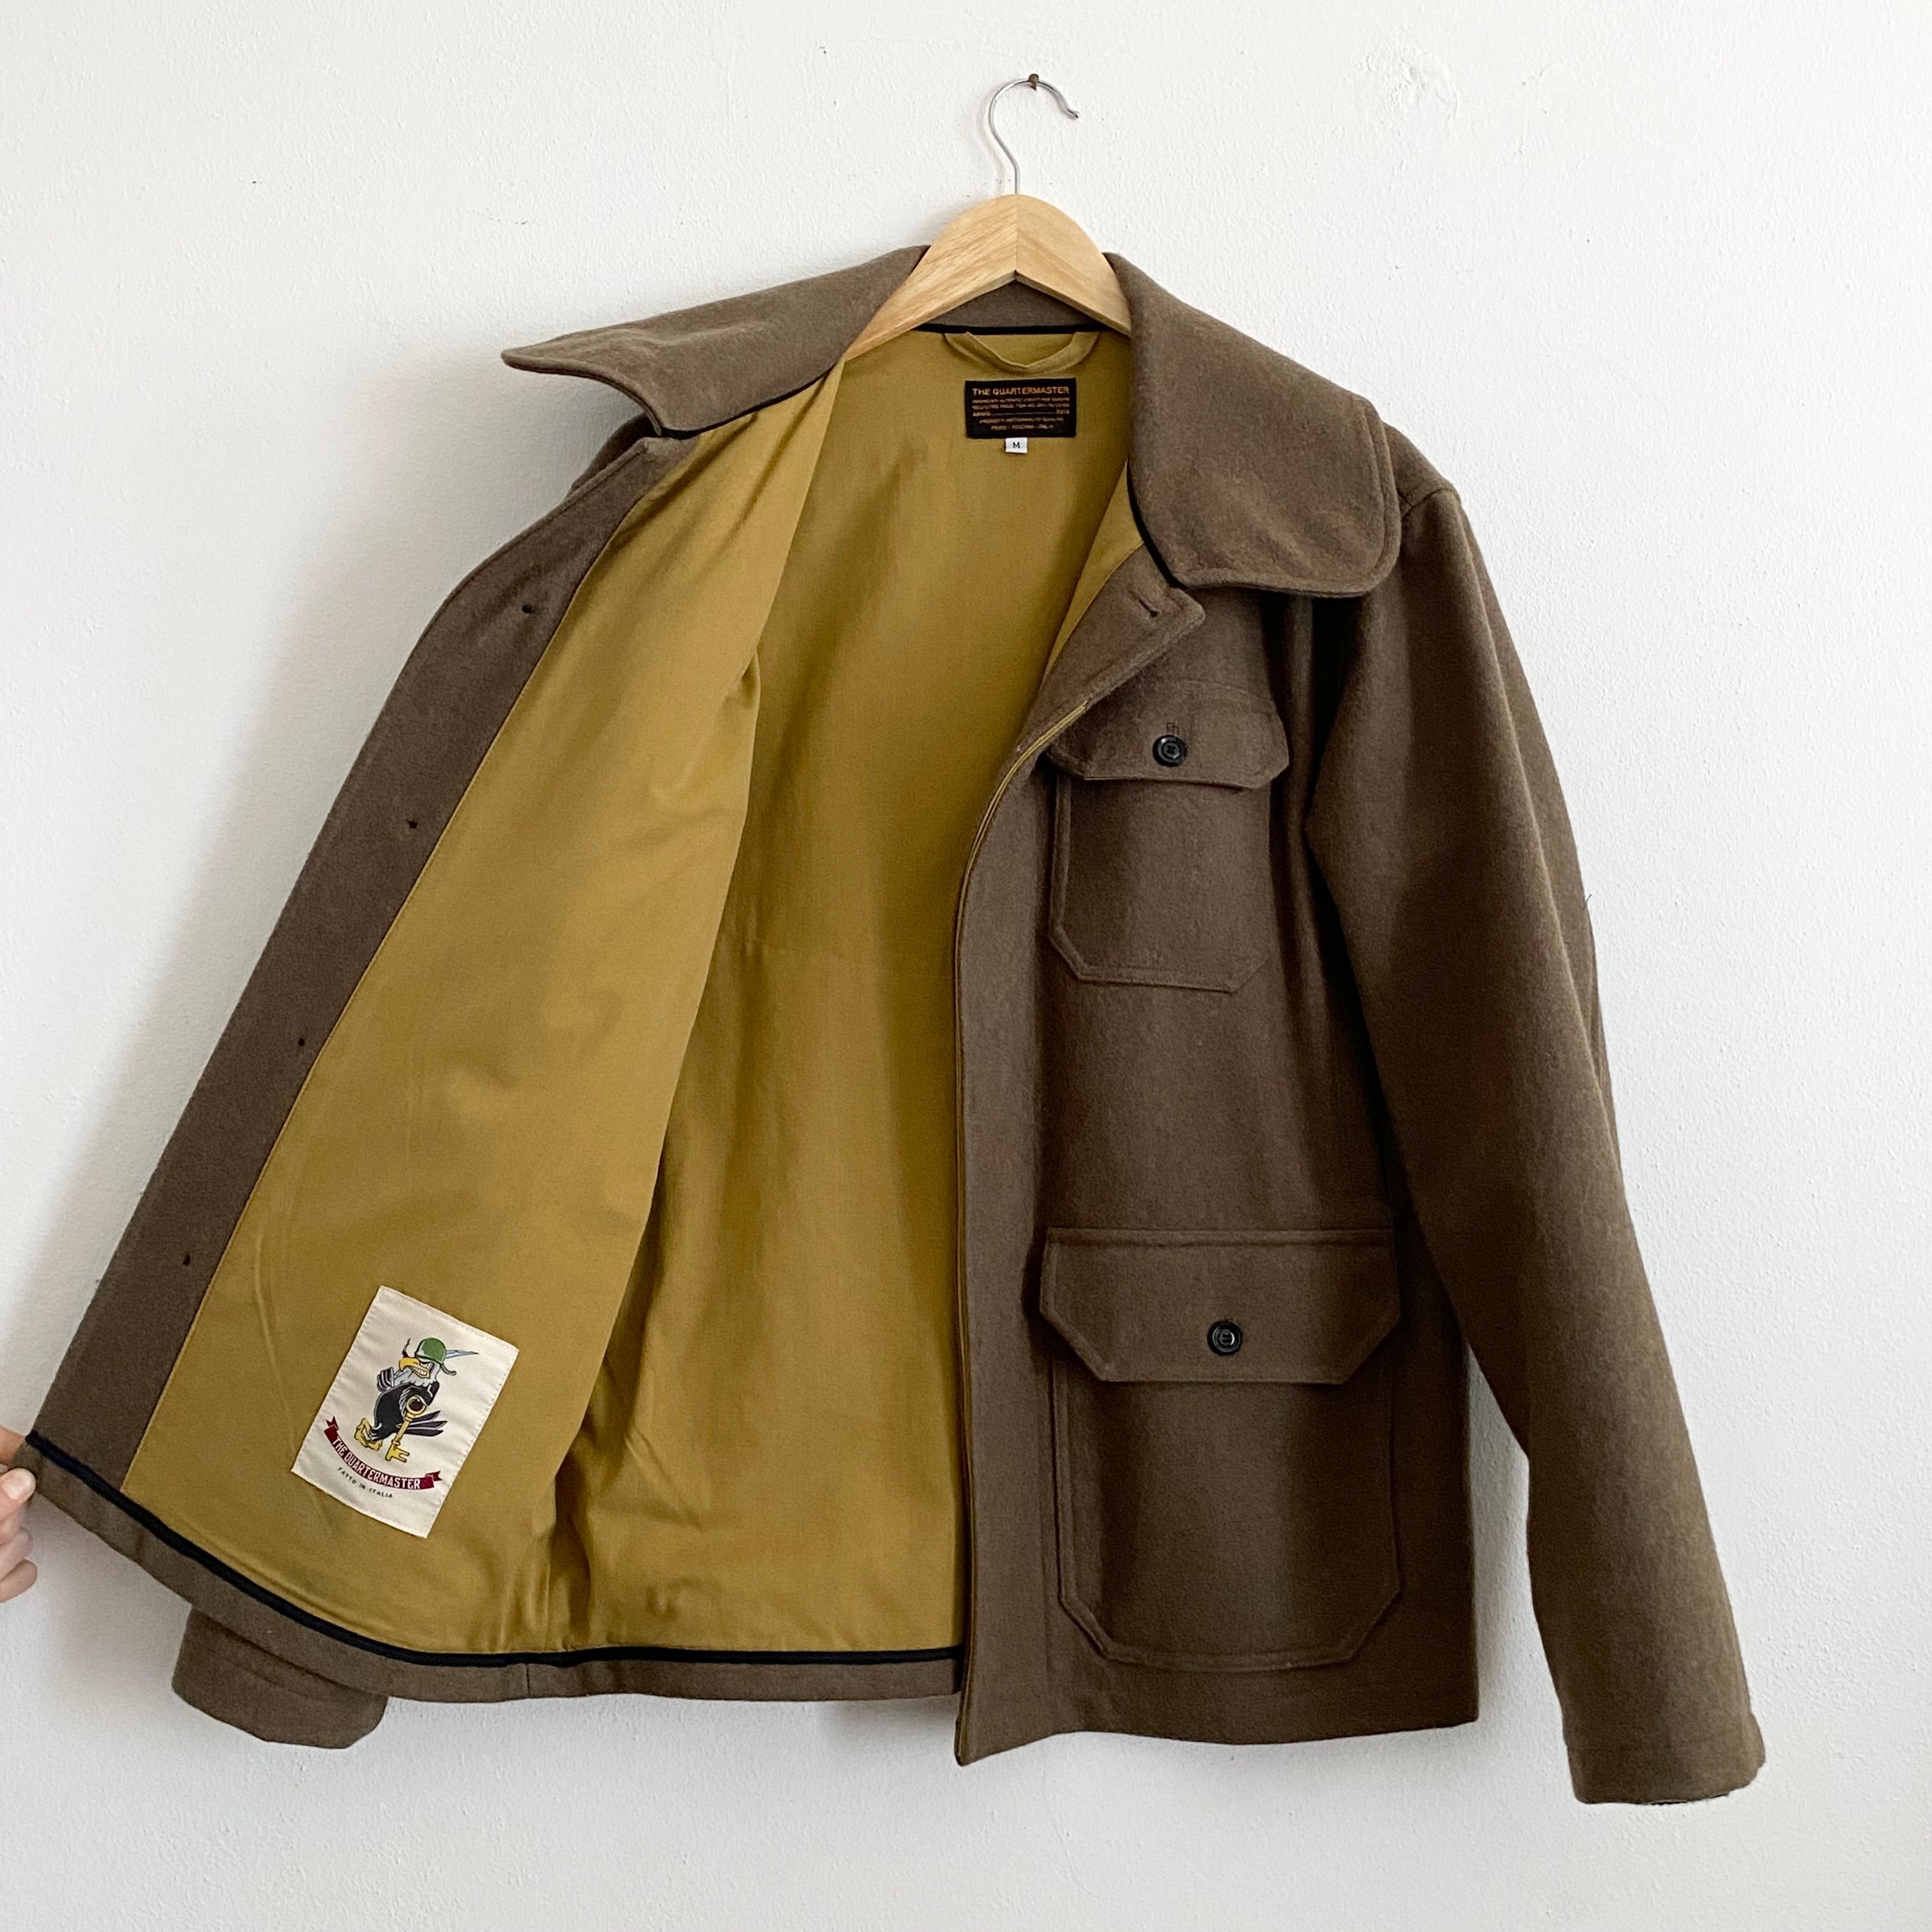 Hunter Jacket in Brown - M